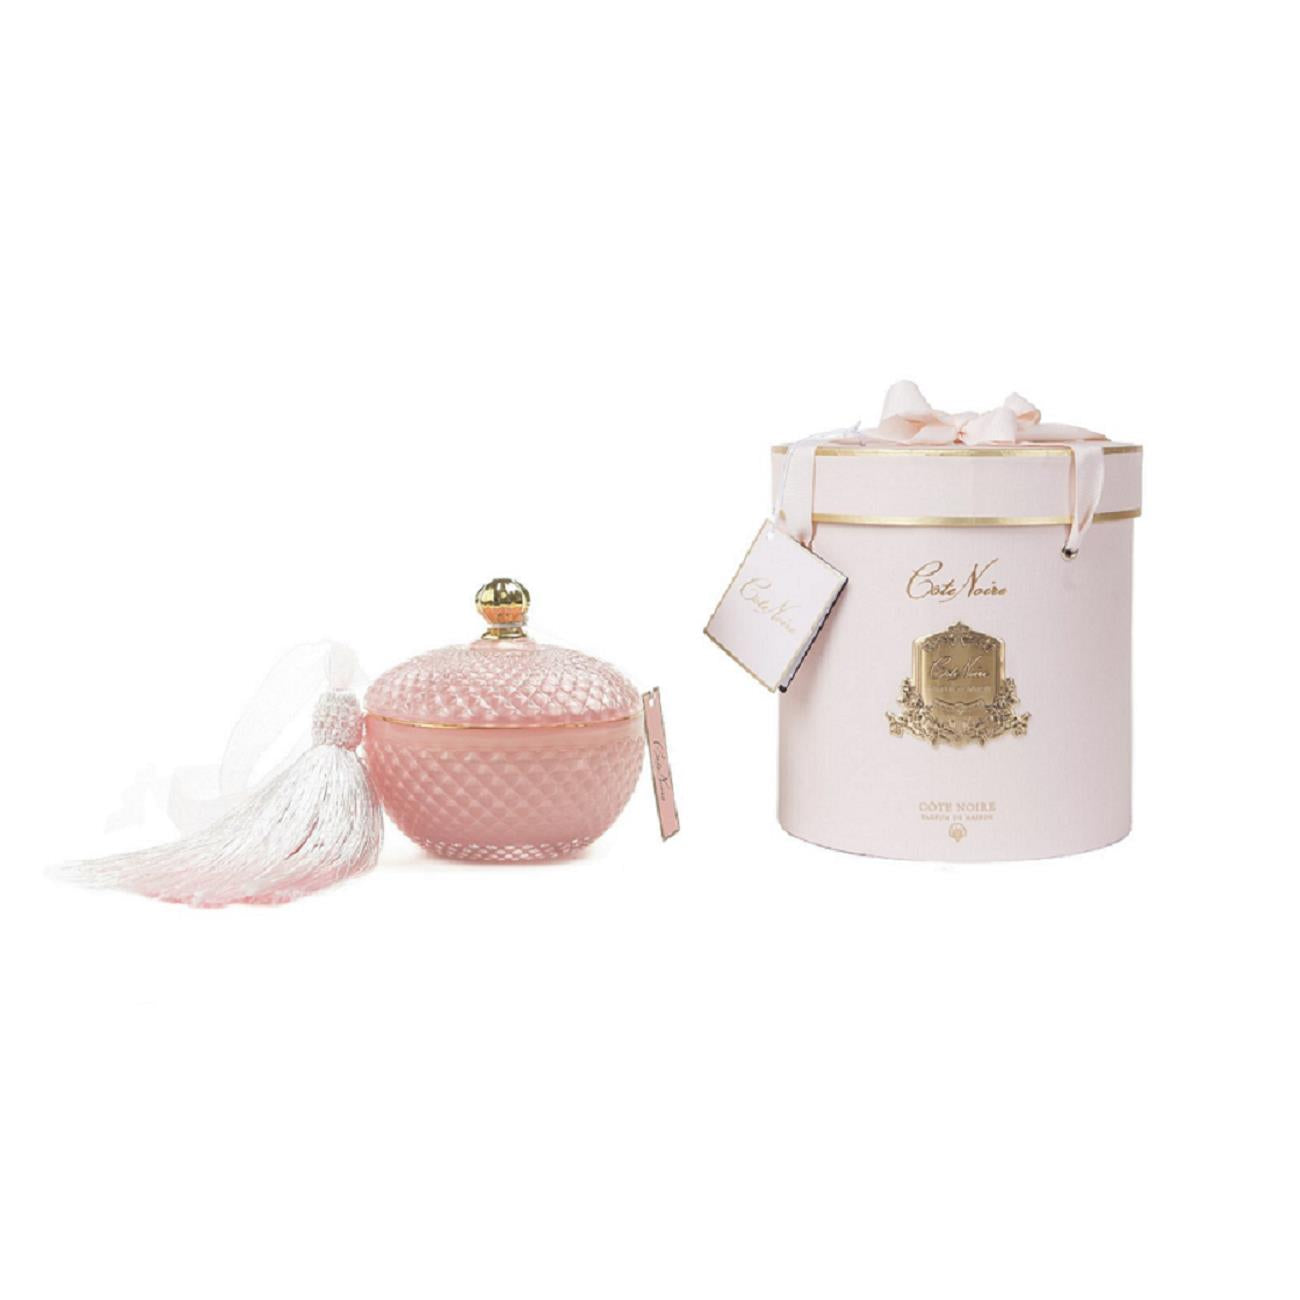 Cote Noire Round Art Deco Candle -  Pink - Peony Bouquet - GML30002.